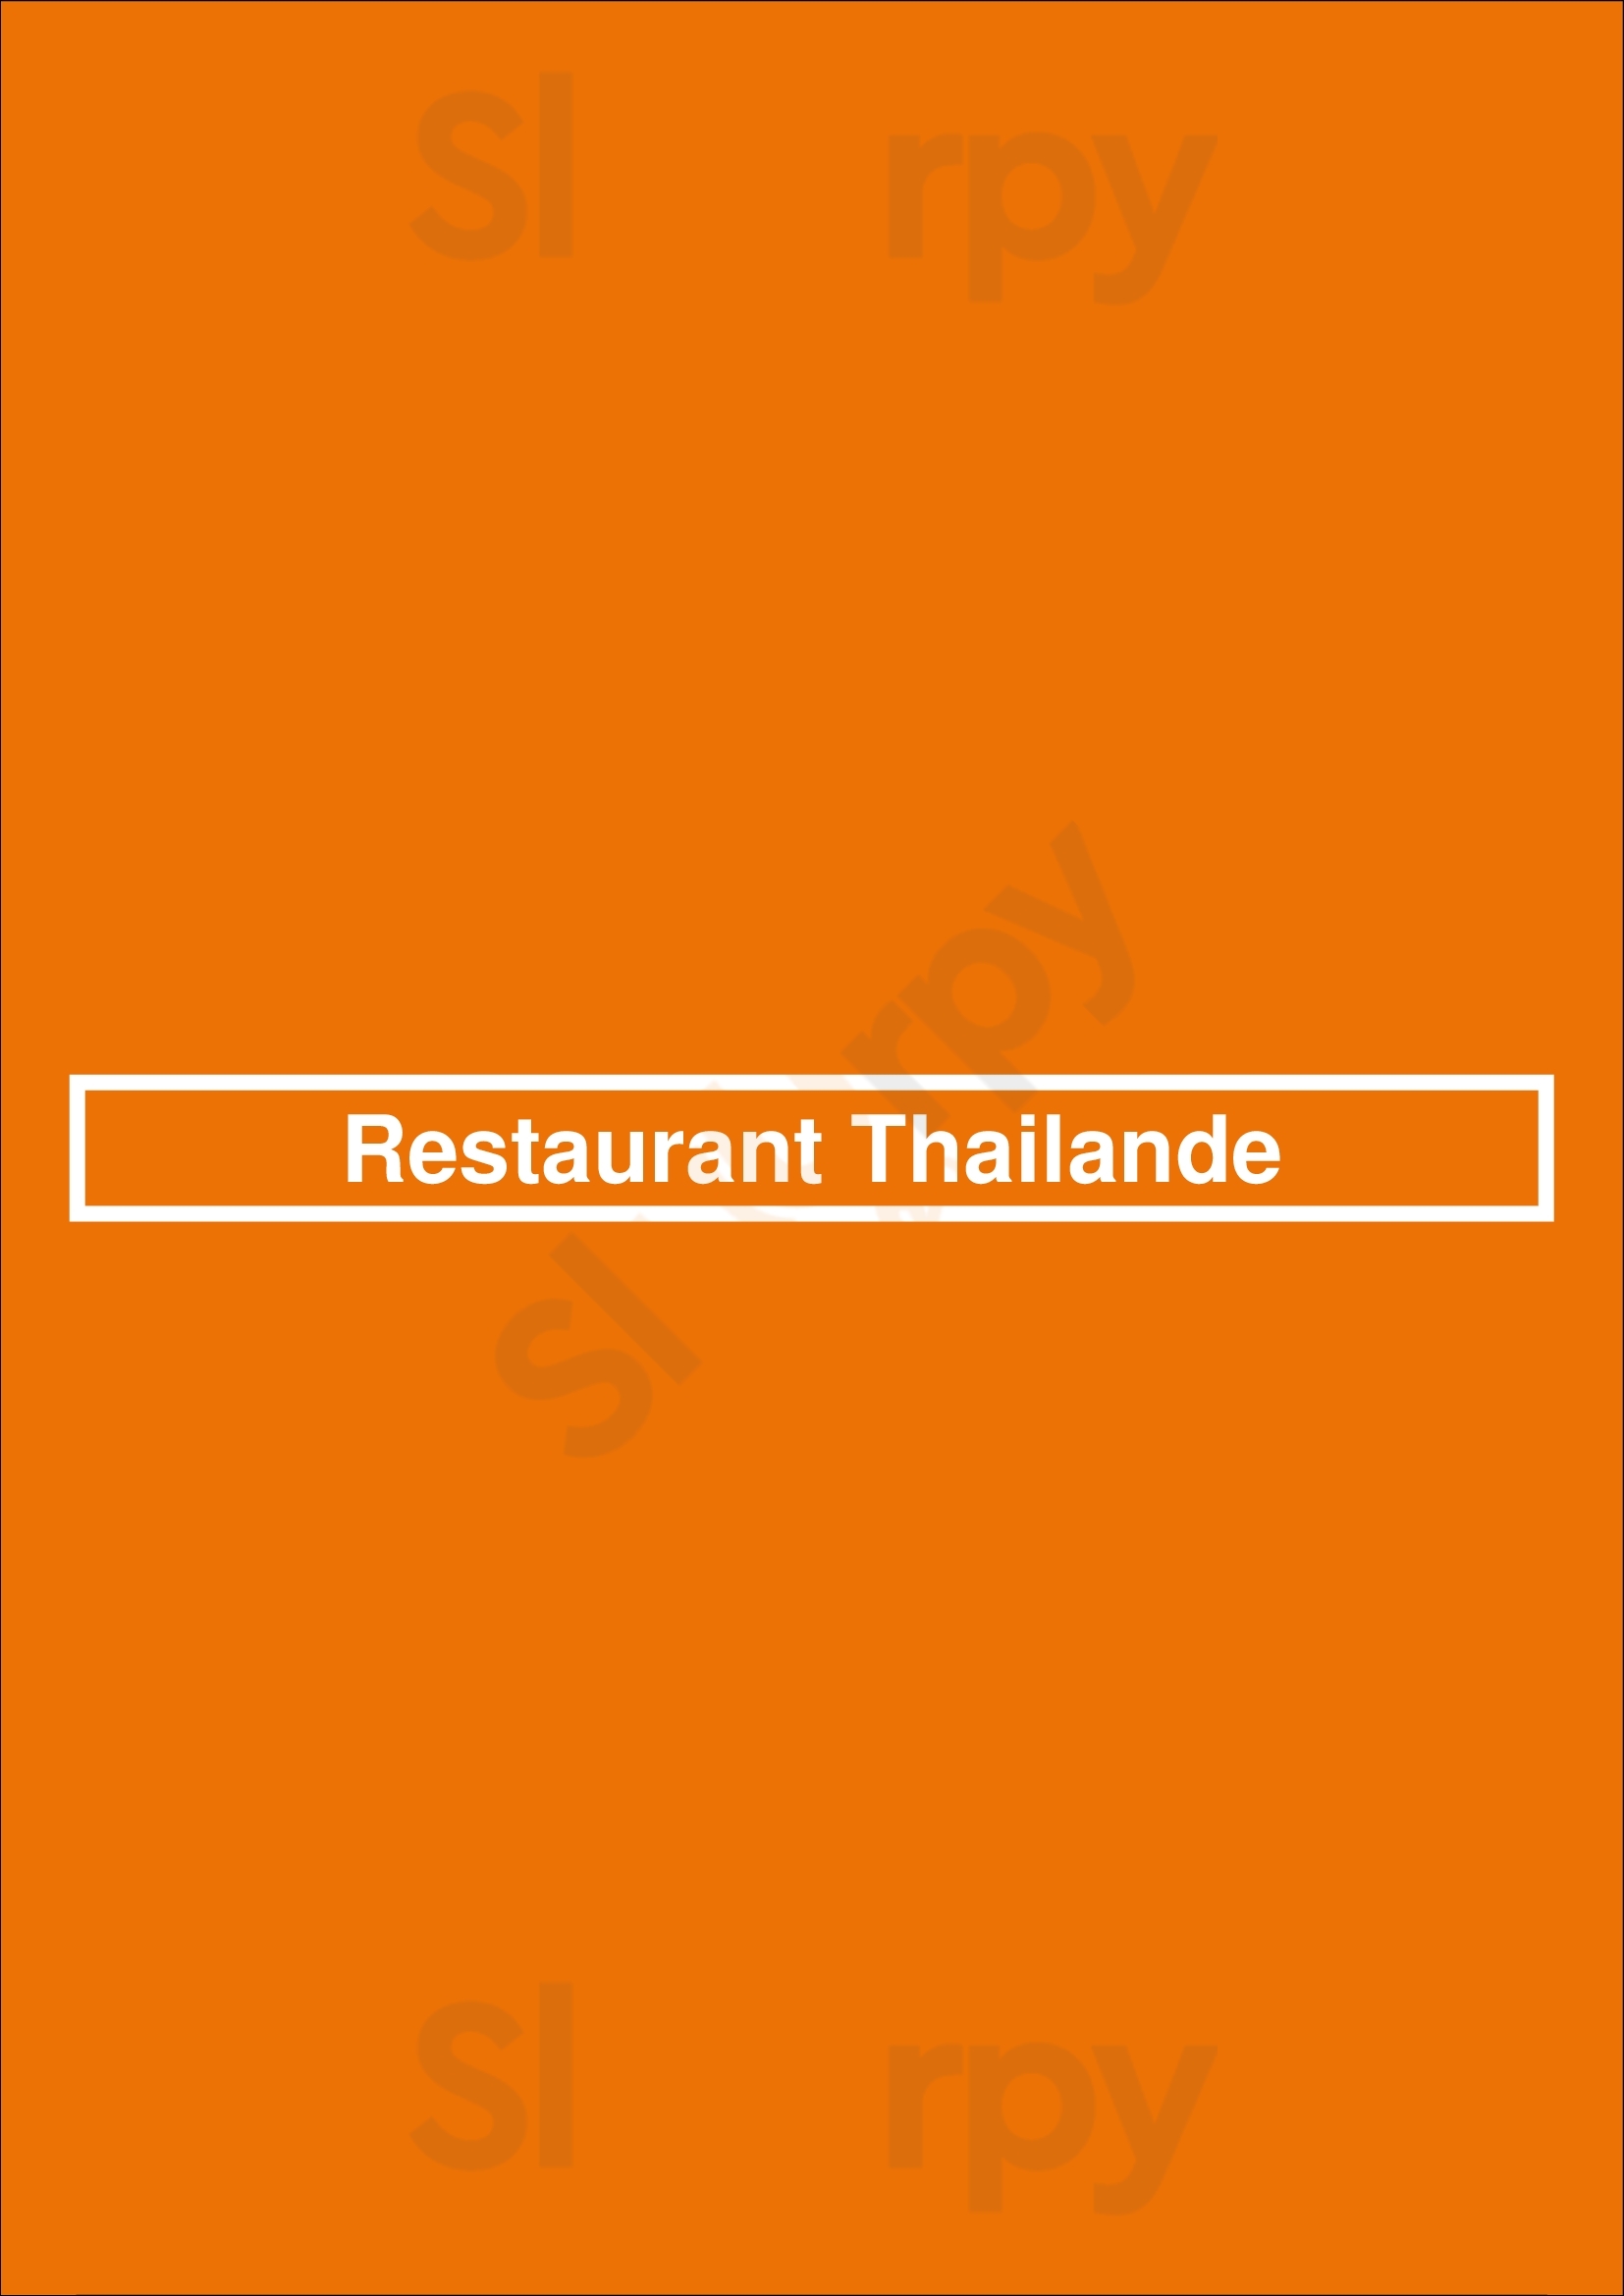 Restaurant Thailande Montreal Menu - 1